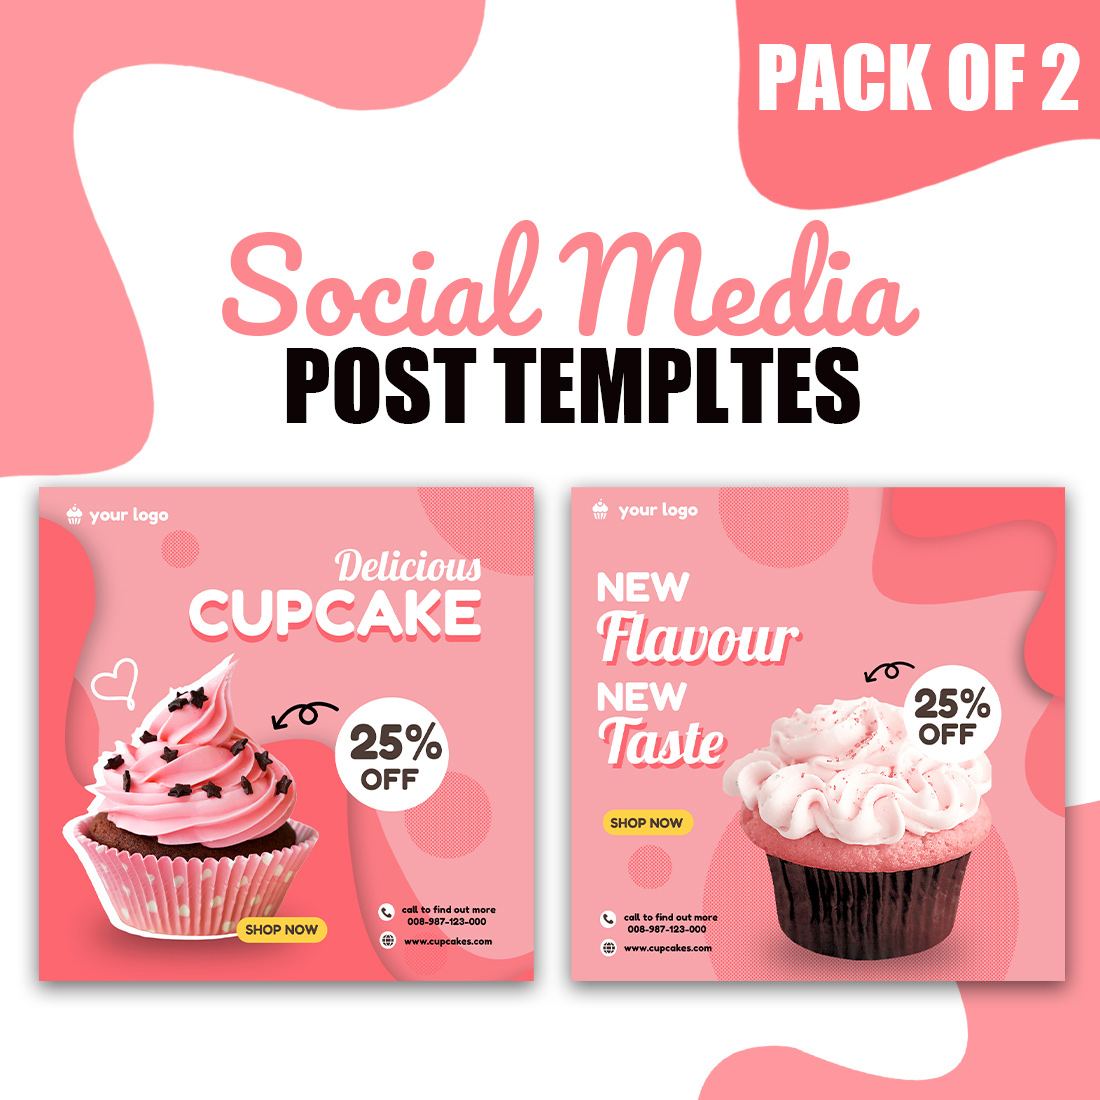 Cupcakes Social Media Post Bundle cover image.